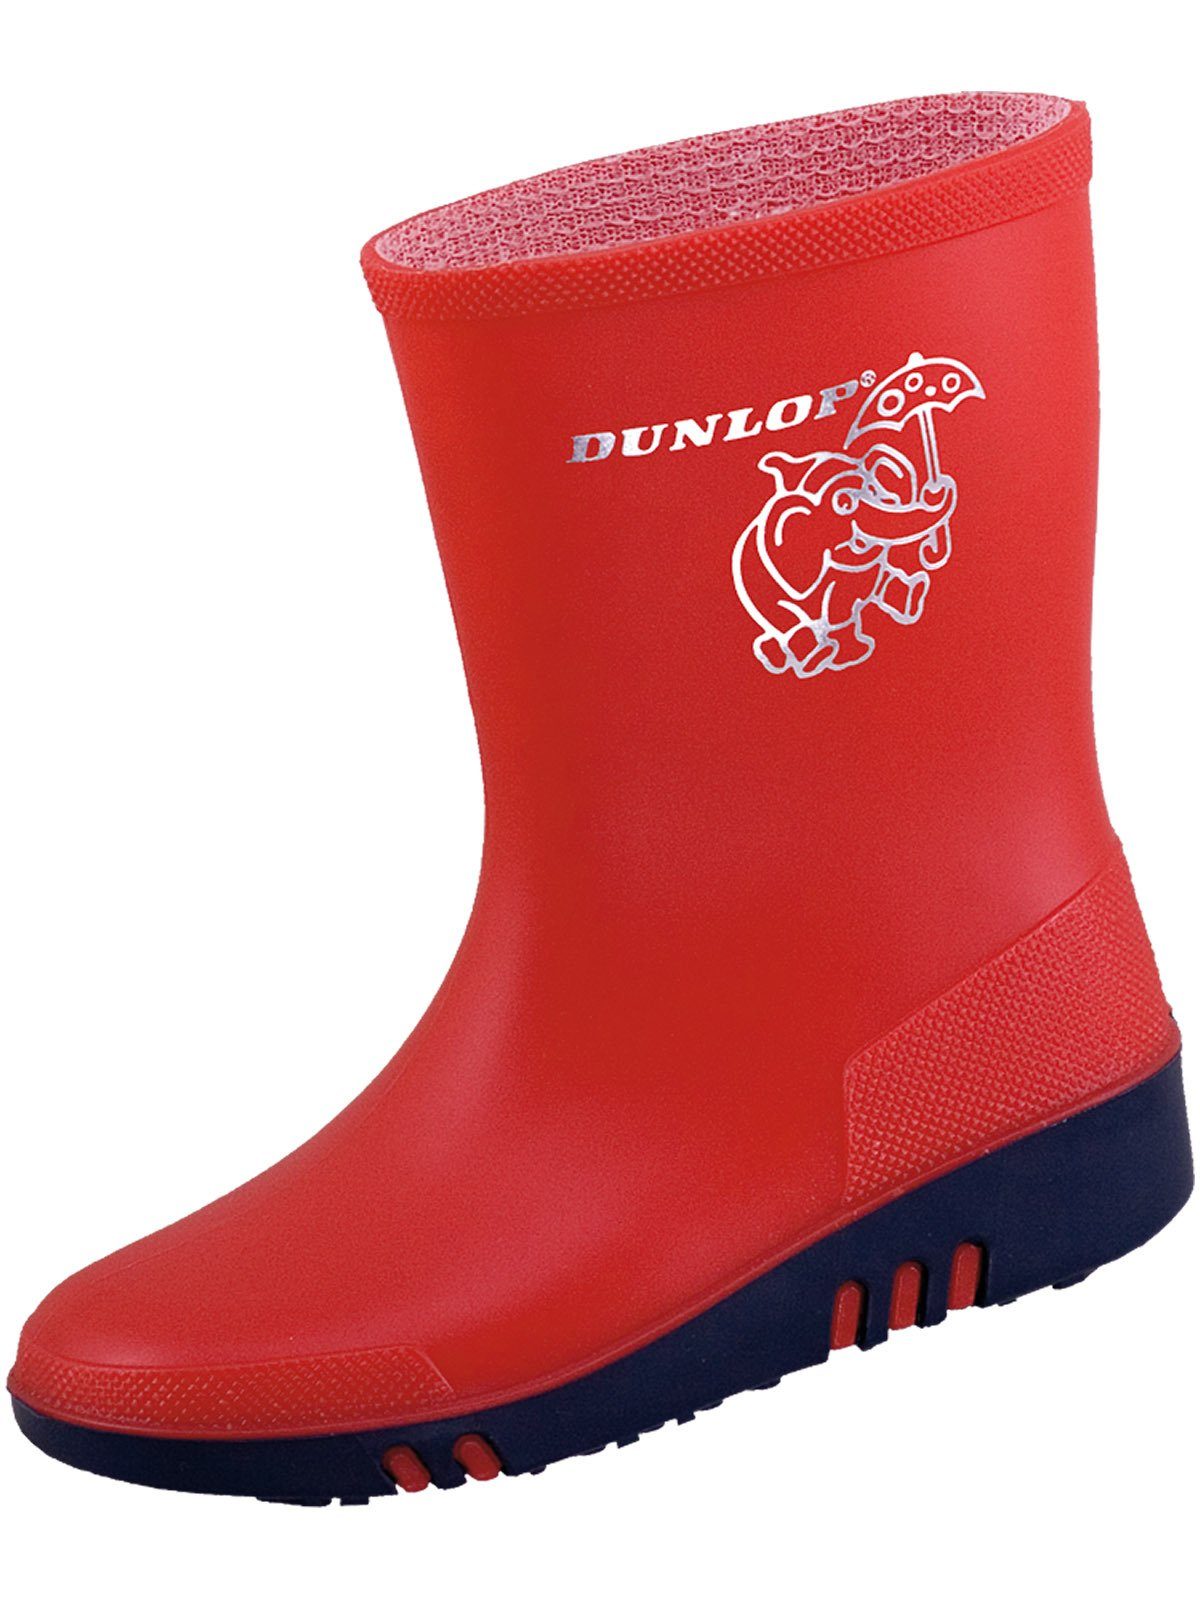 Gummistiefel Dunlop Dunlop_Workwear rot/blau Mini